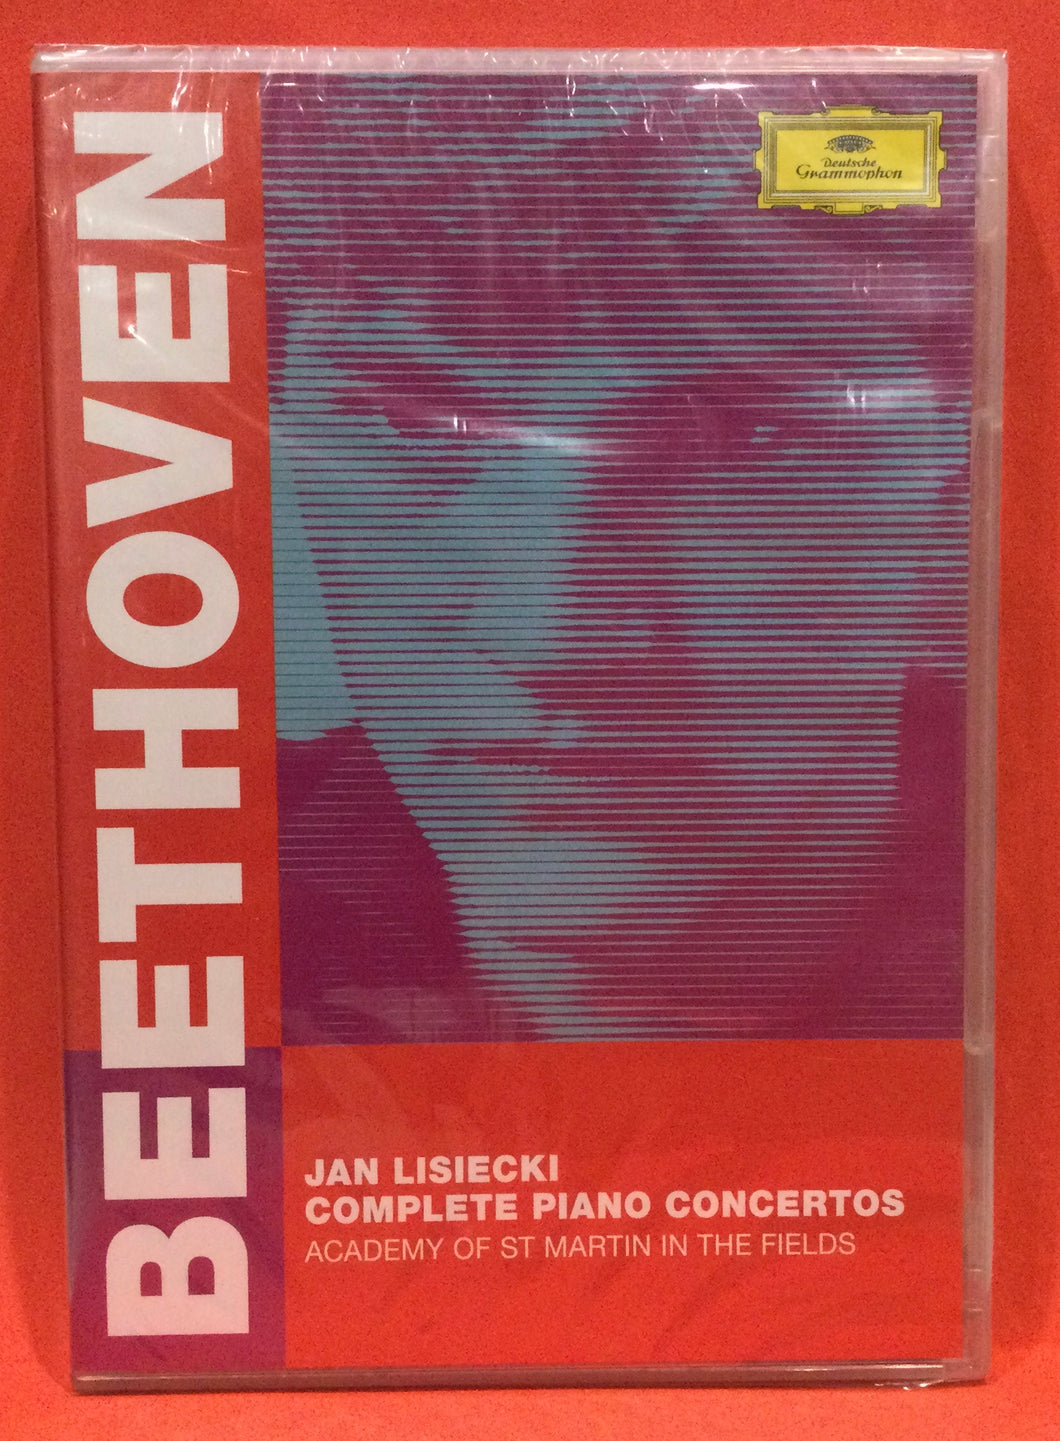 BEETHOVEN COMPLETE PIANO CONCERTOS - JAN LISIECKI - DVD 2020 (SEALED)